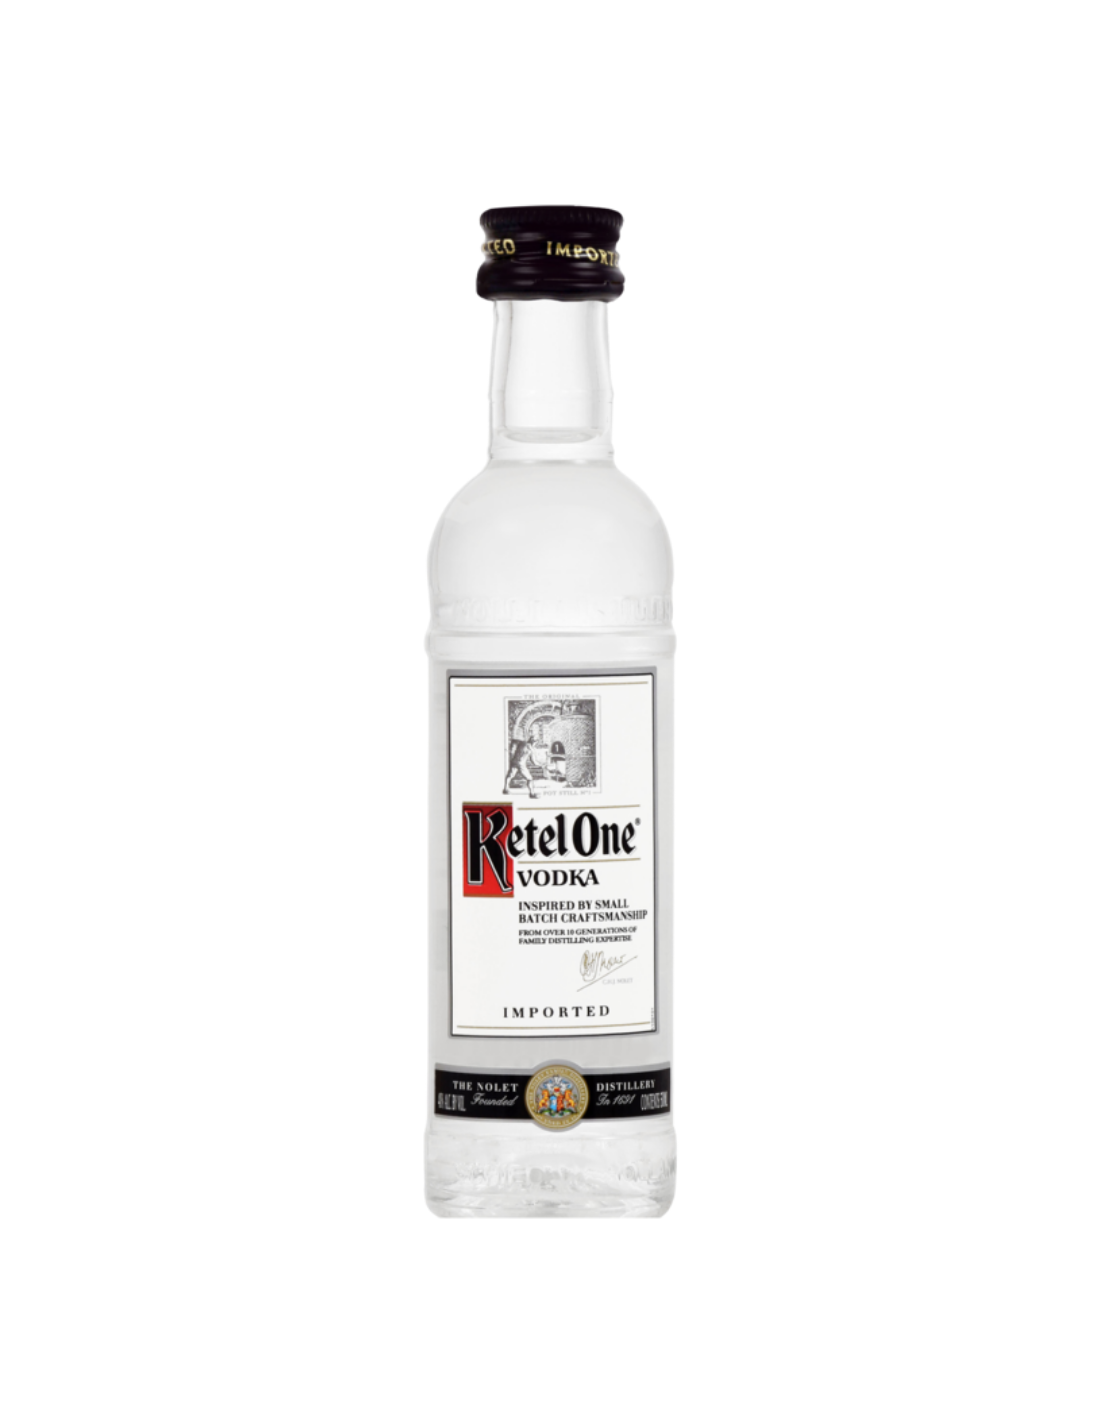 Vodca Ketel 1 Jong Jenever, 0.05L, 35% alc., Olanda alcooldiscount.ro